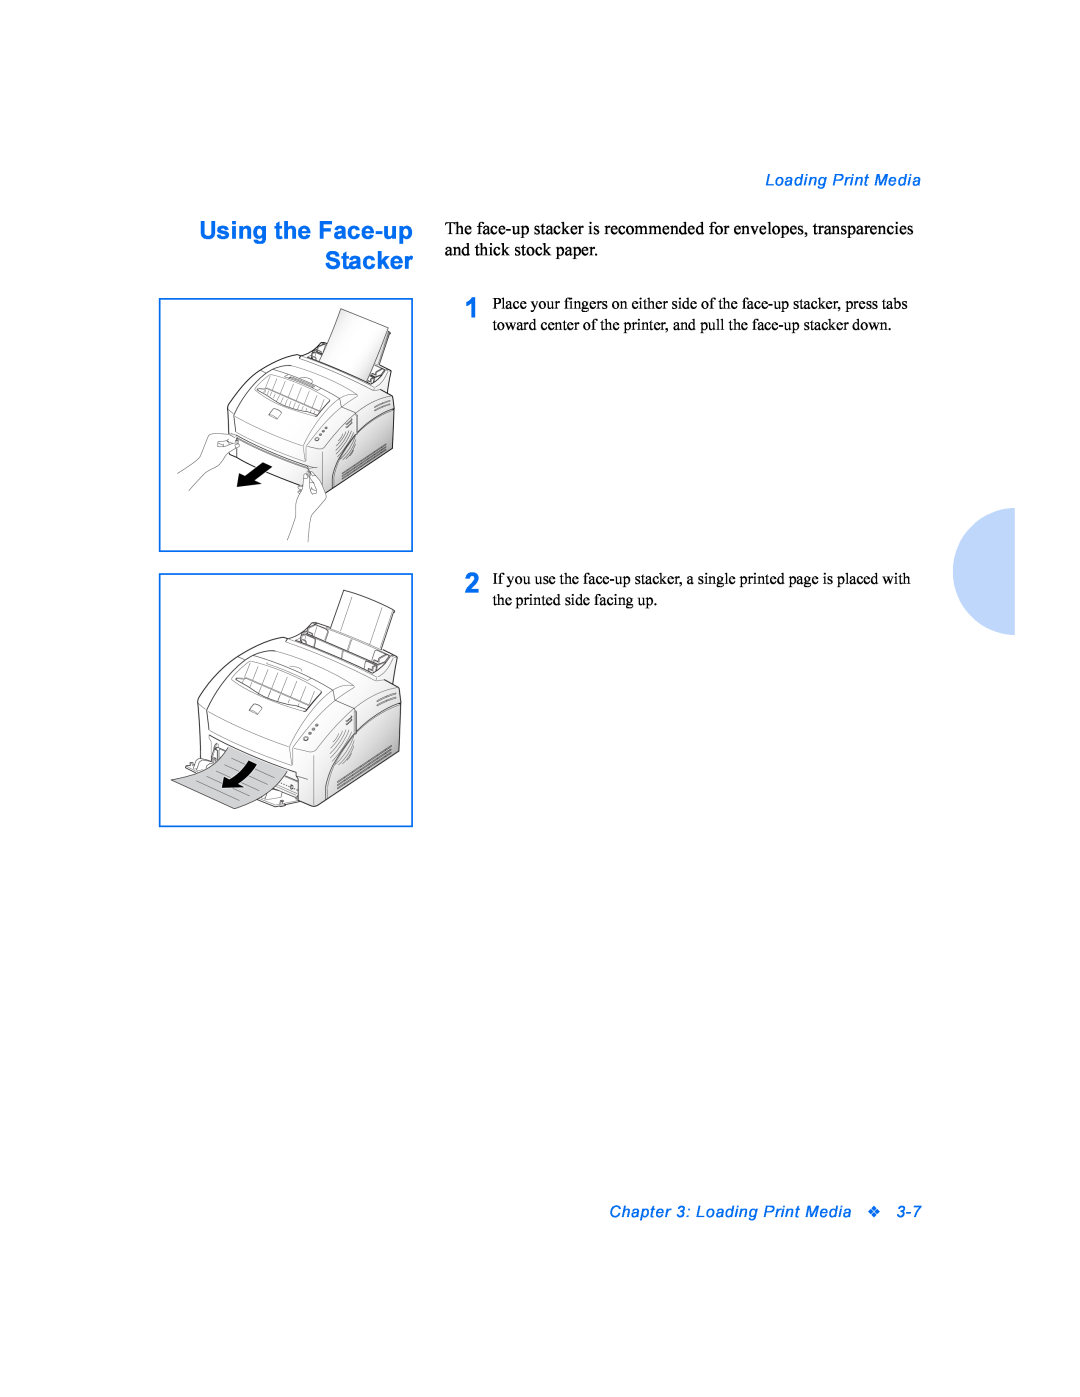 Xerox DocuPrint P8ex manual Using the Face-upStacker, Loading Print Media 